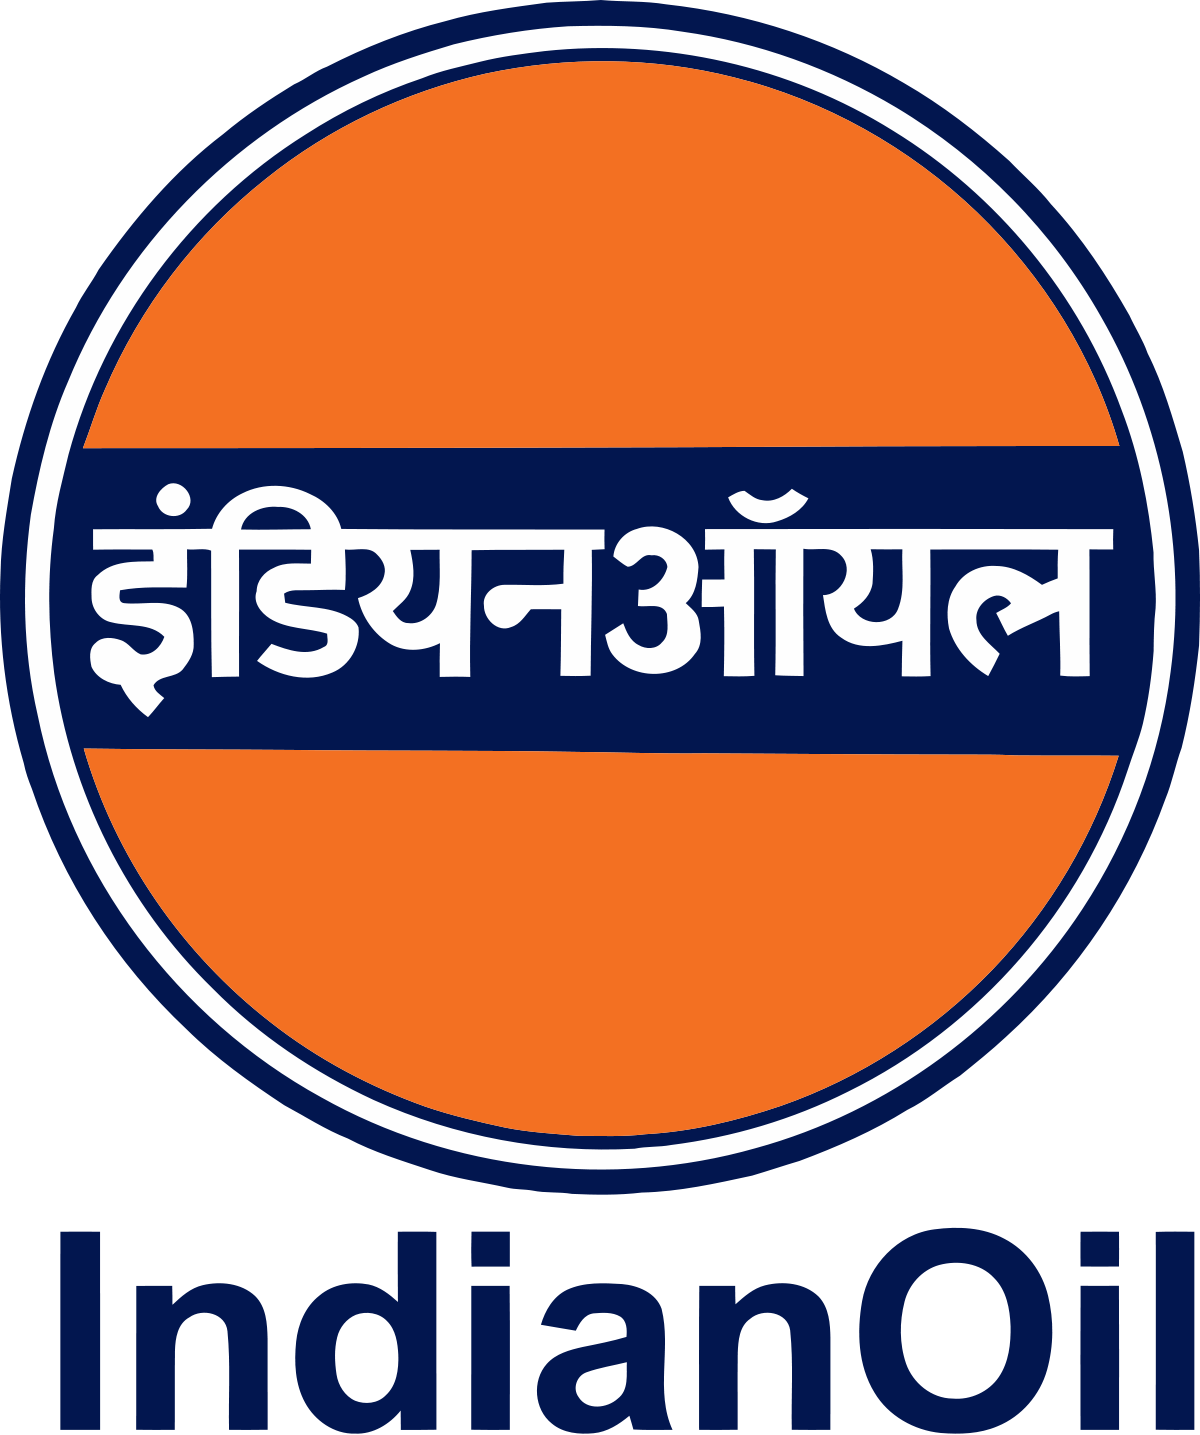 Indian-Oil-Logo